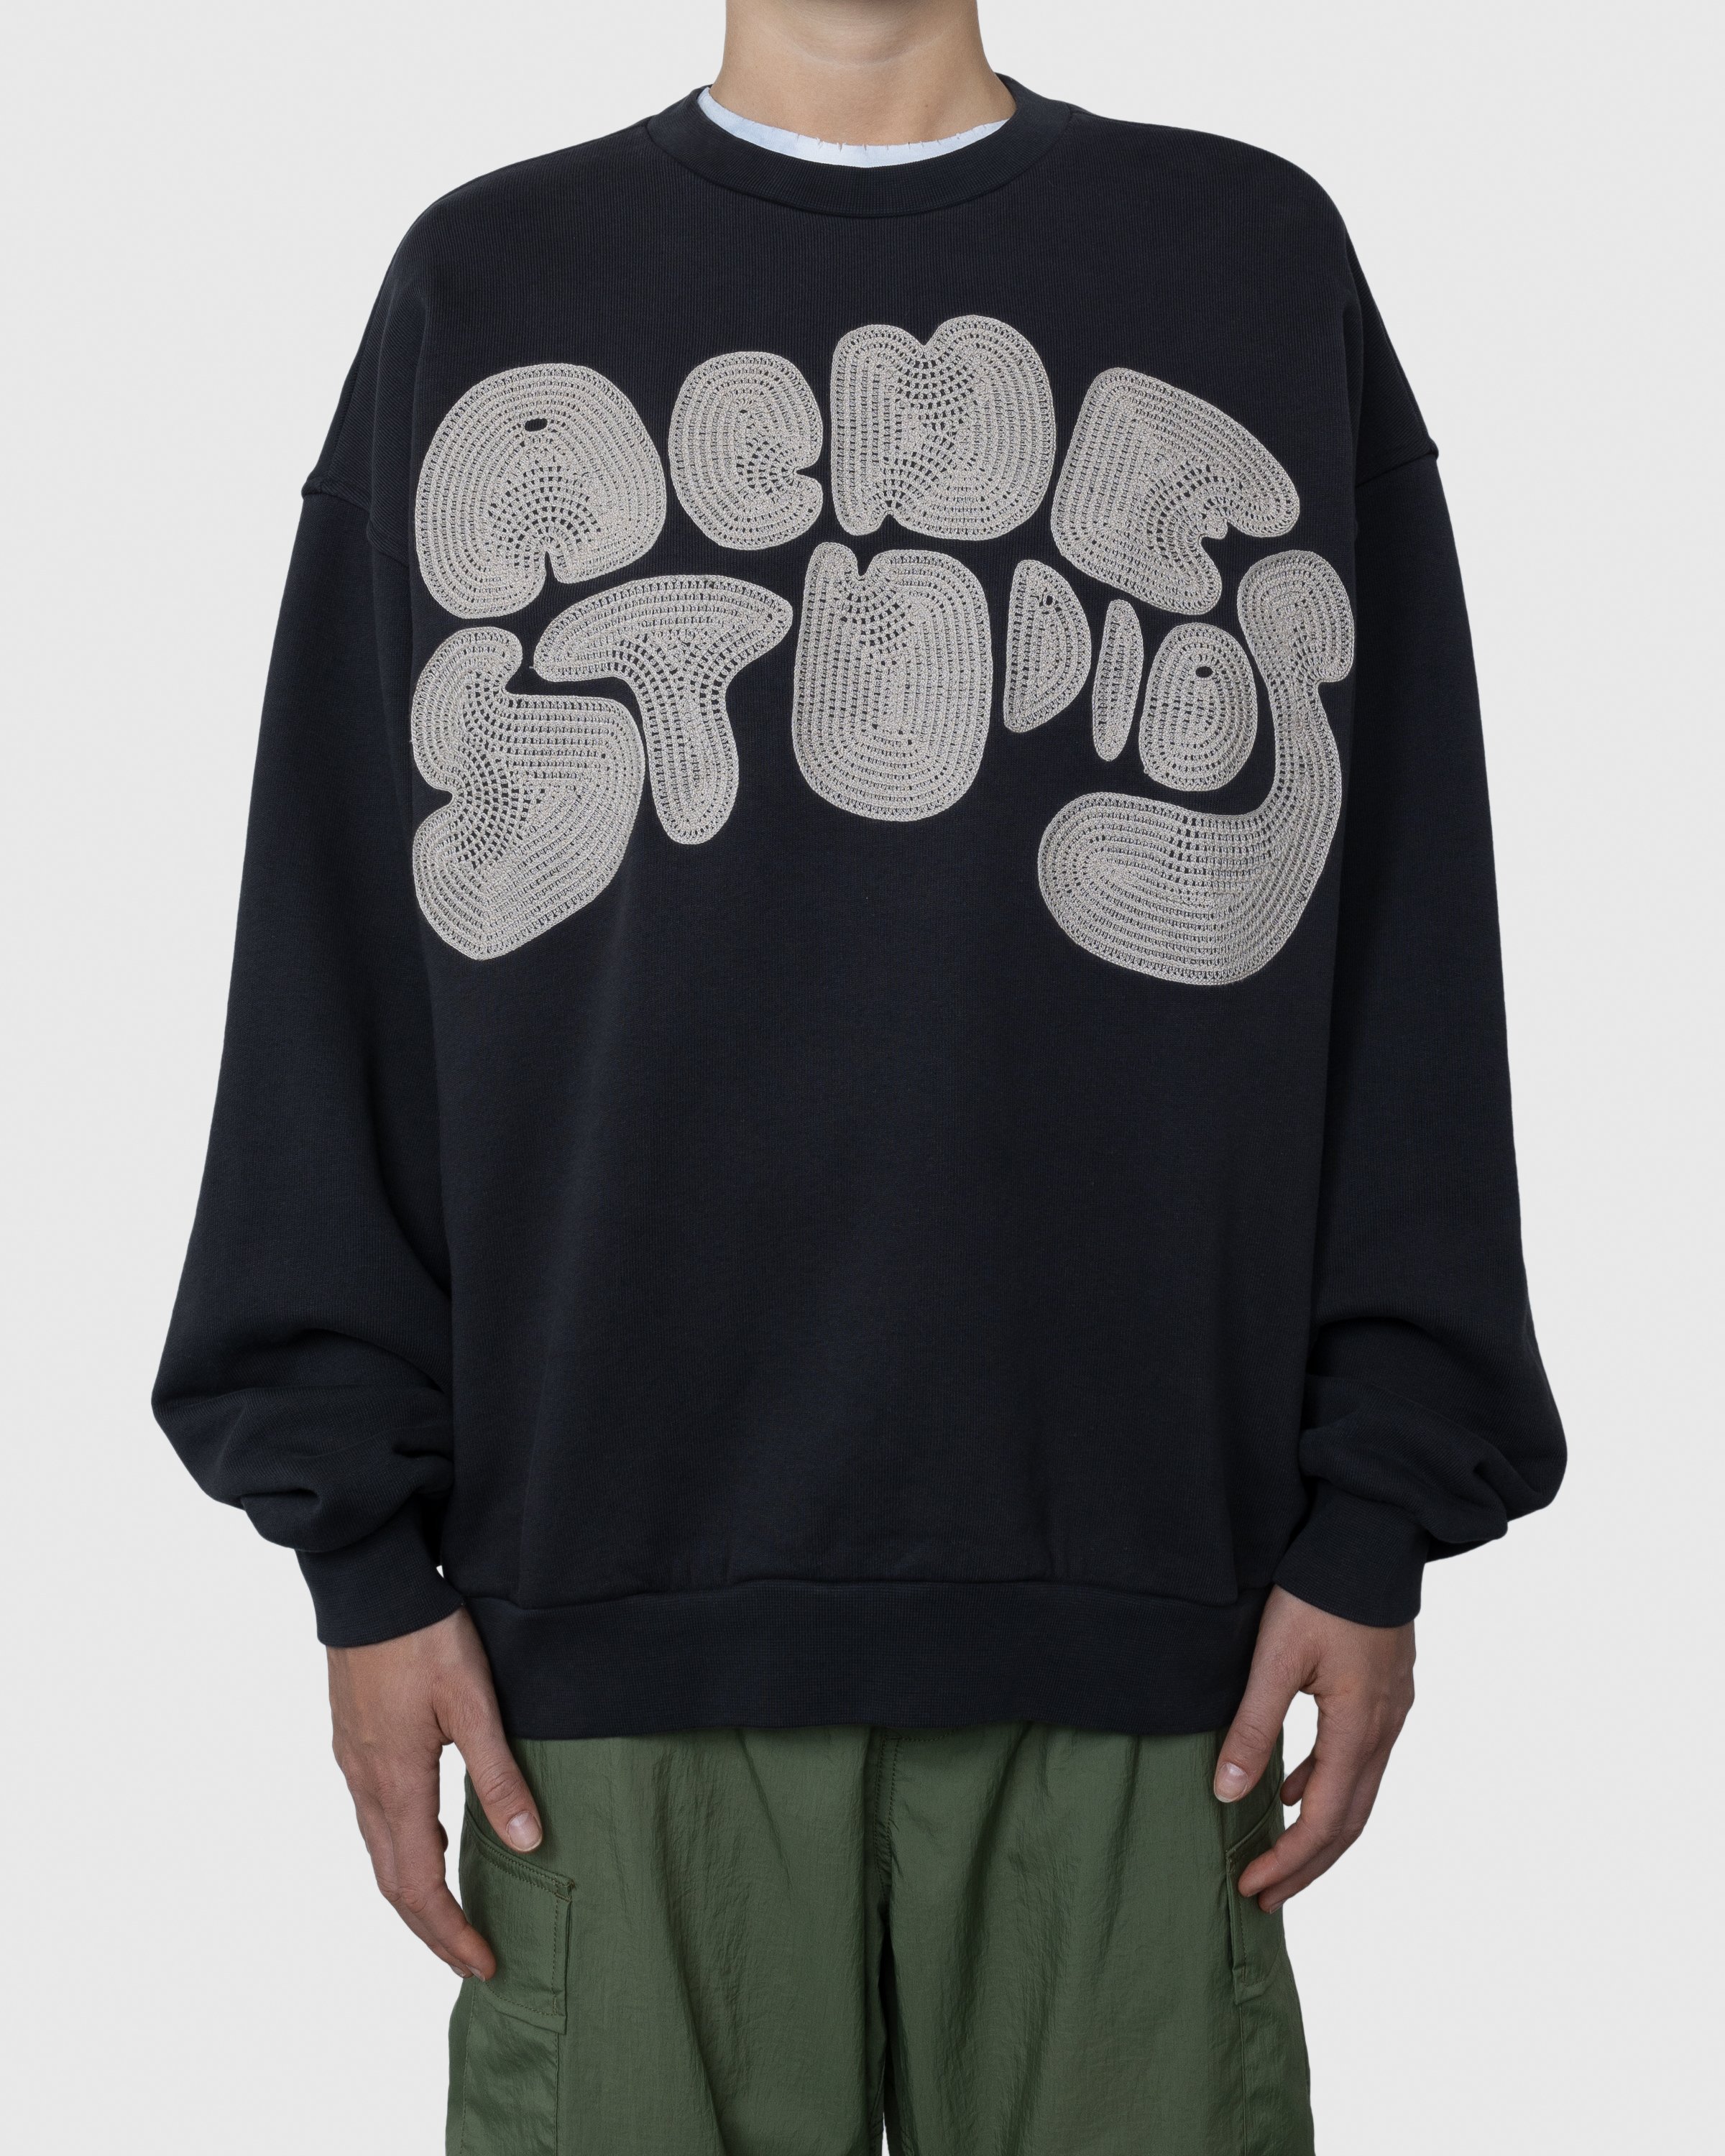 Acne Studios - Bubble Logo Crewneck Sweater Anthracite Grey - Clothing - Black - Image 2